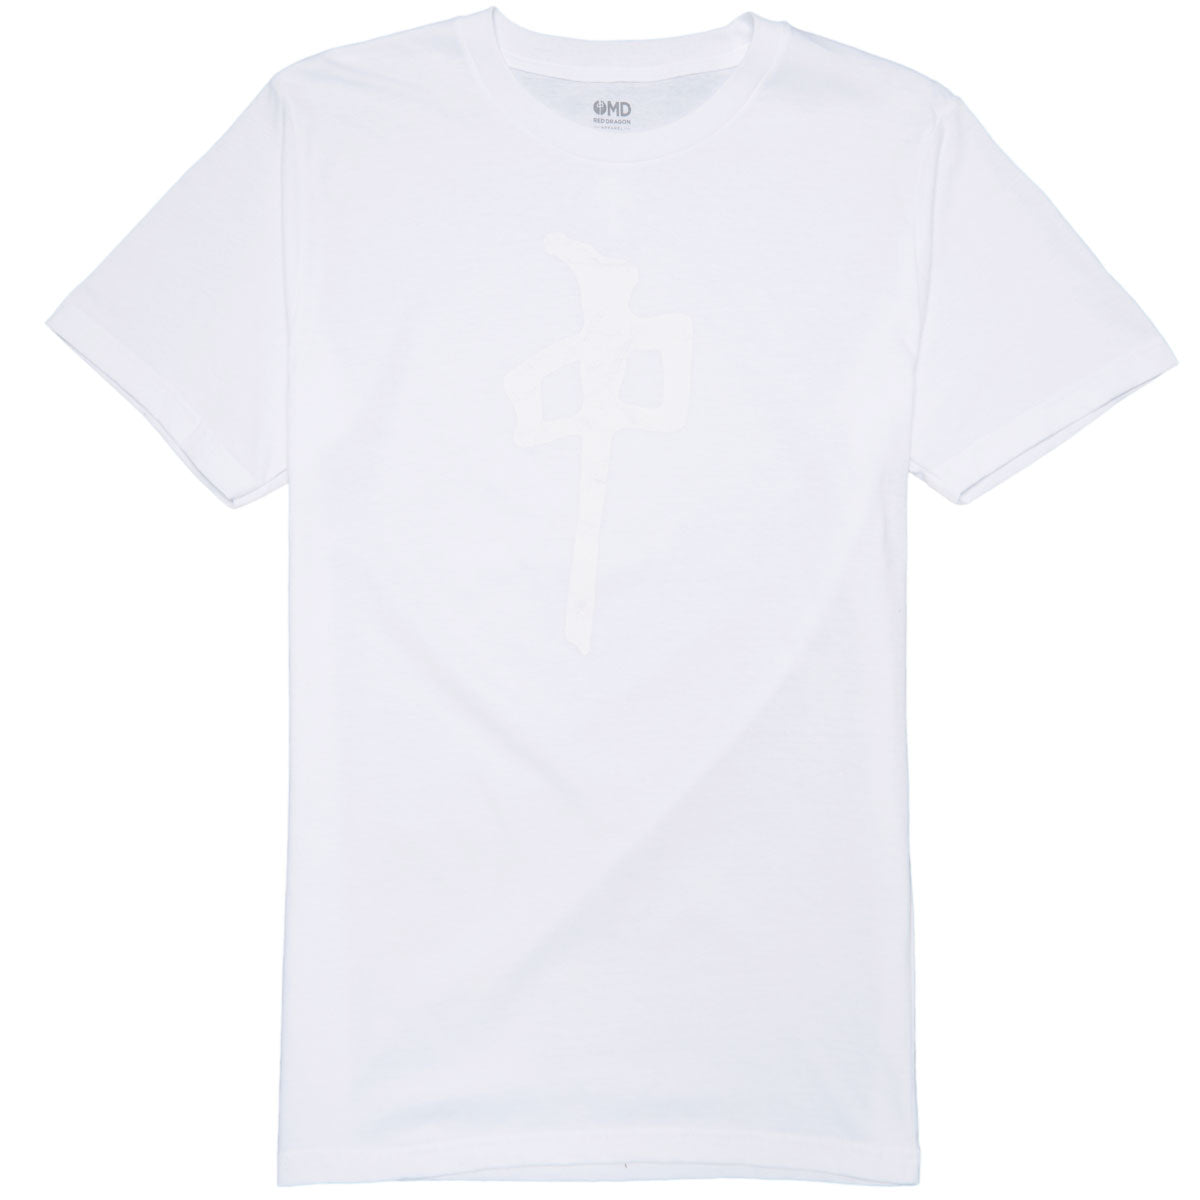 RDS Tonal Worn Chung T-Shirt - White image 1